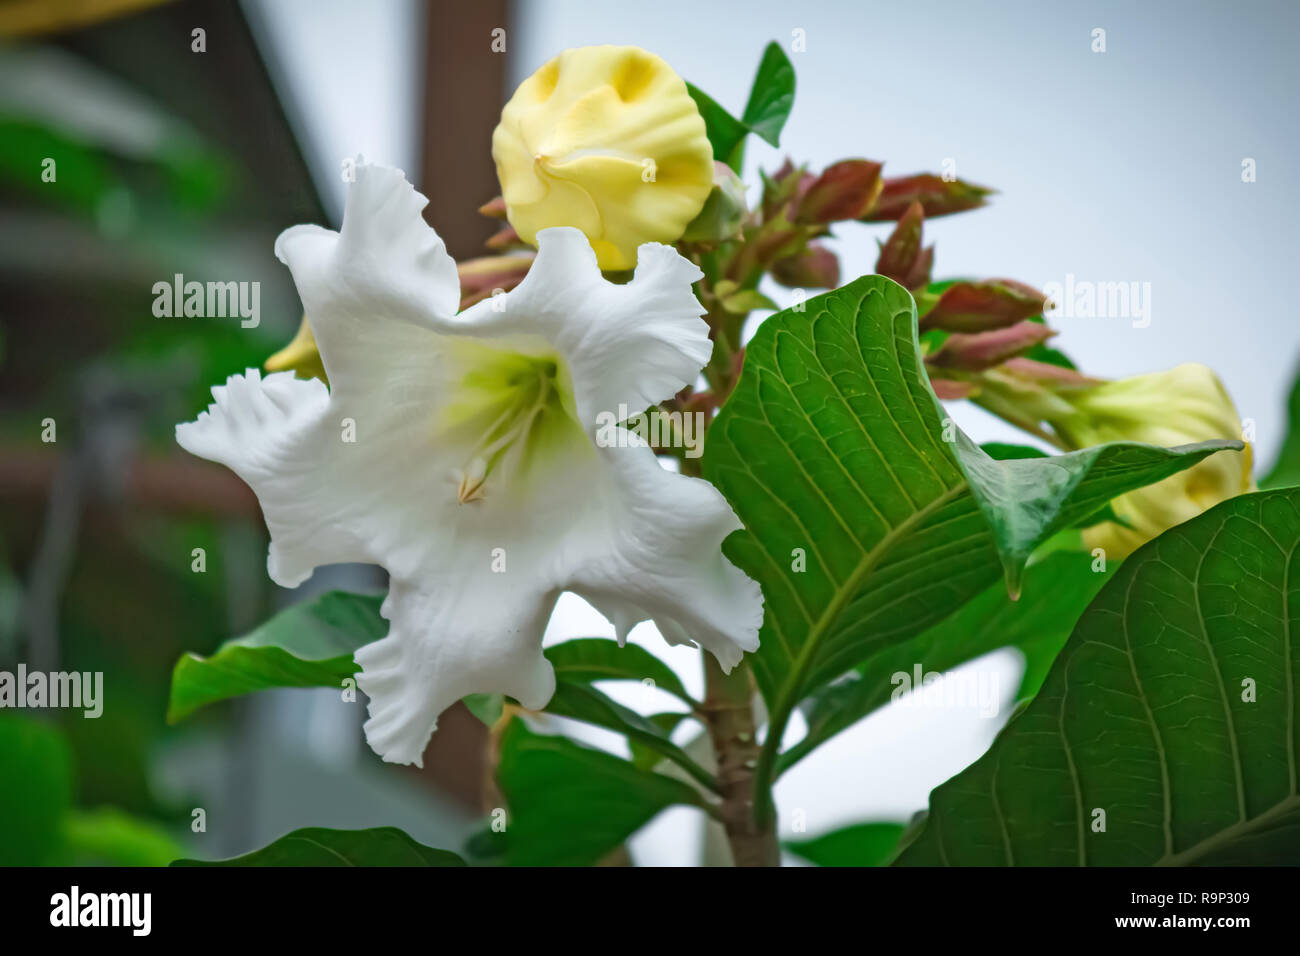 Beautiful white flowers on blur background (Beaumontia grandiflora - Nepal Trumpet Lily Vine) Stock Photo